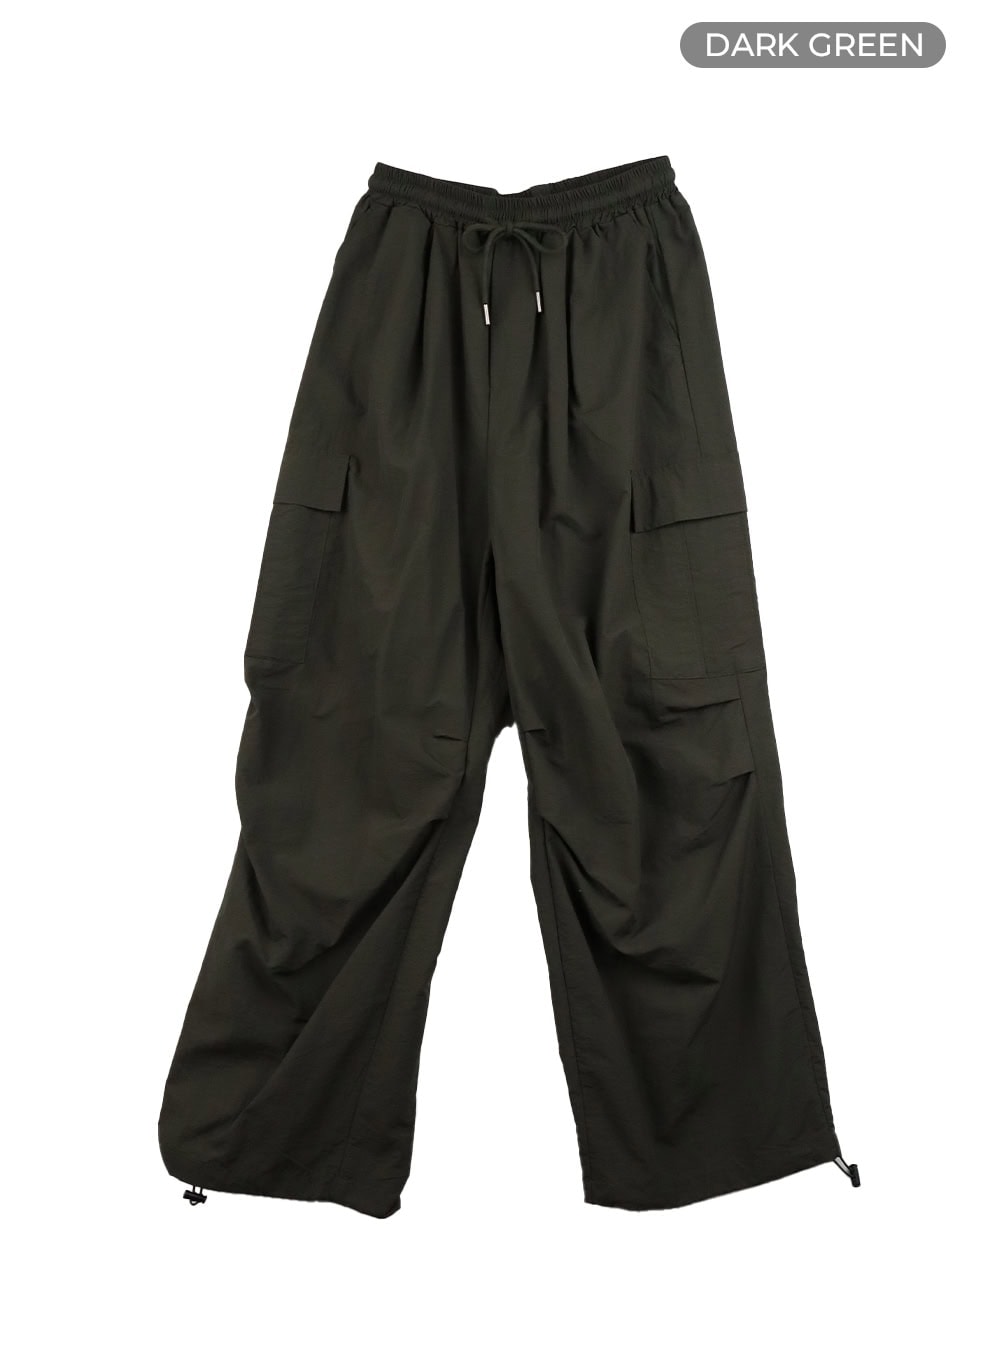 mens-wide-fit-parachute-pants-iy402 / Dark green